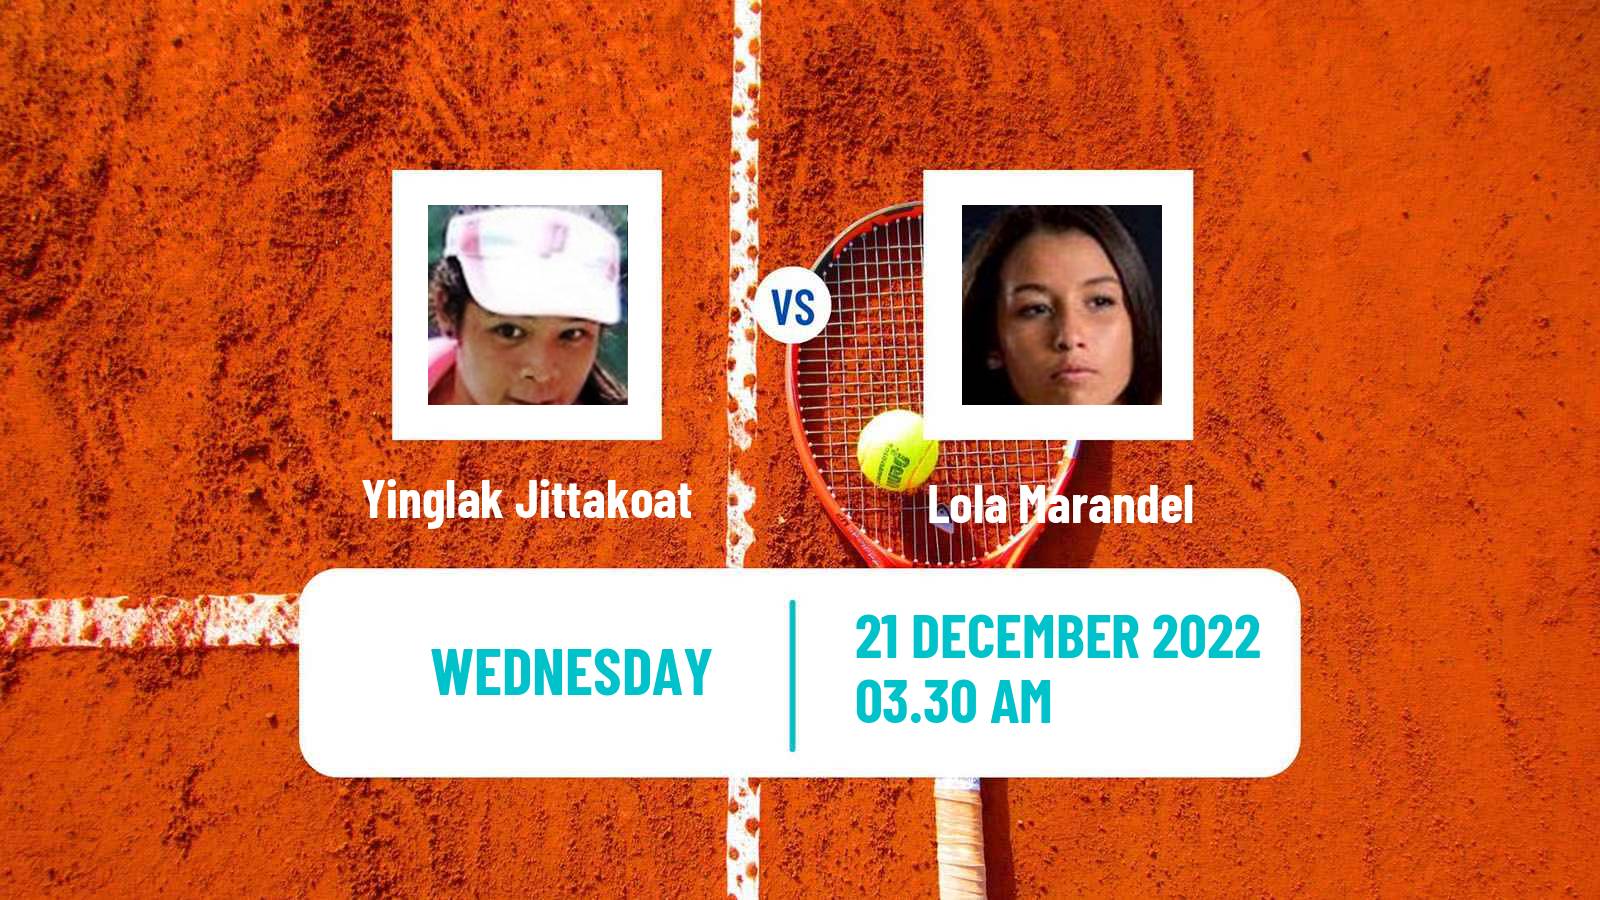 Tennis ITF Tournaments Yinglak Jittakoat - Lola Marandel